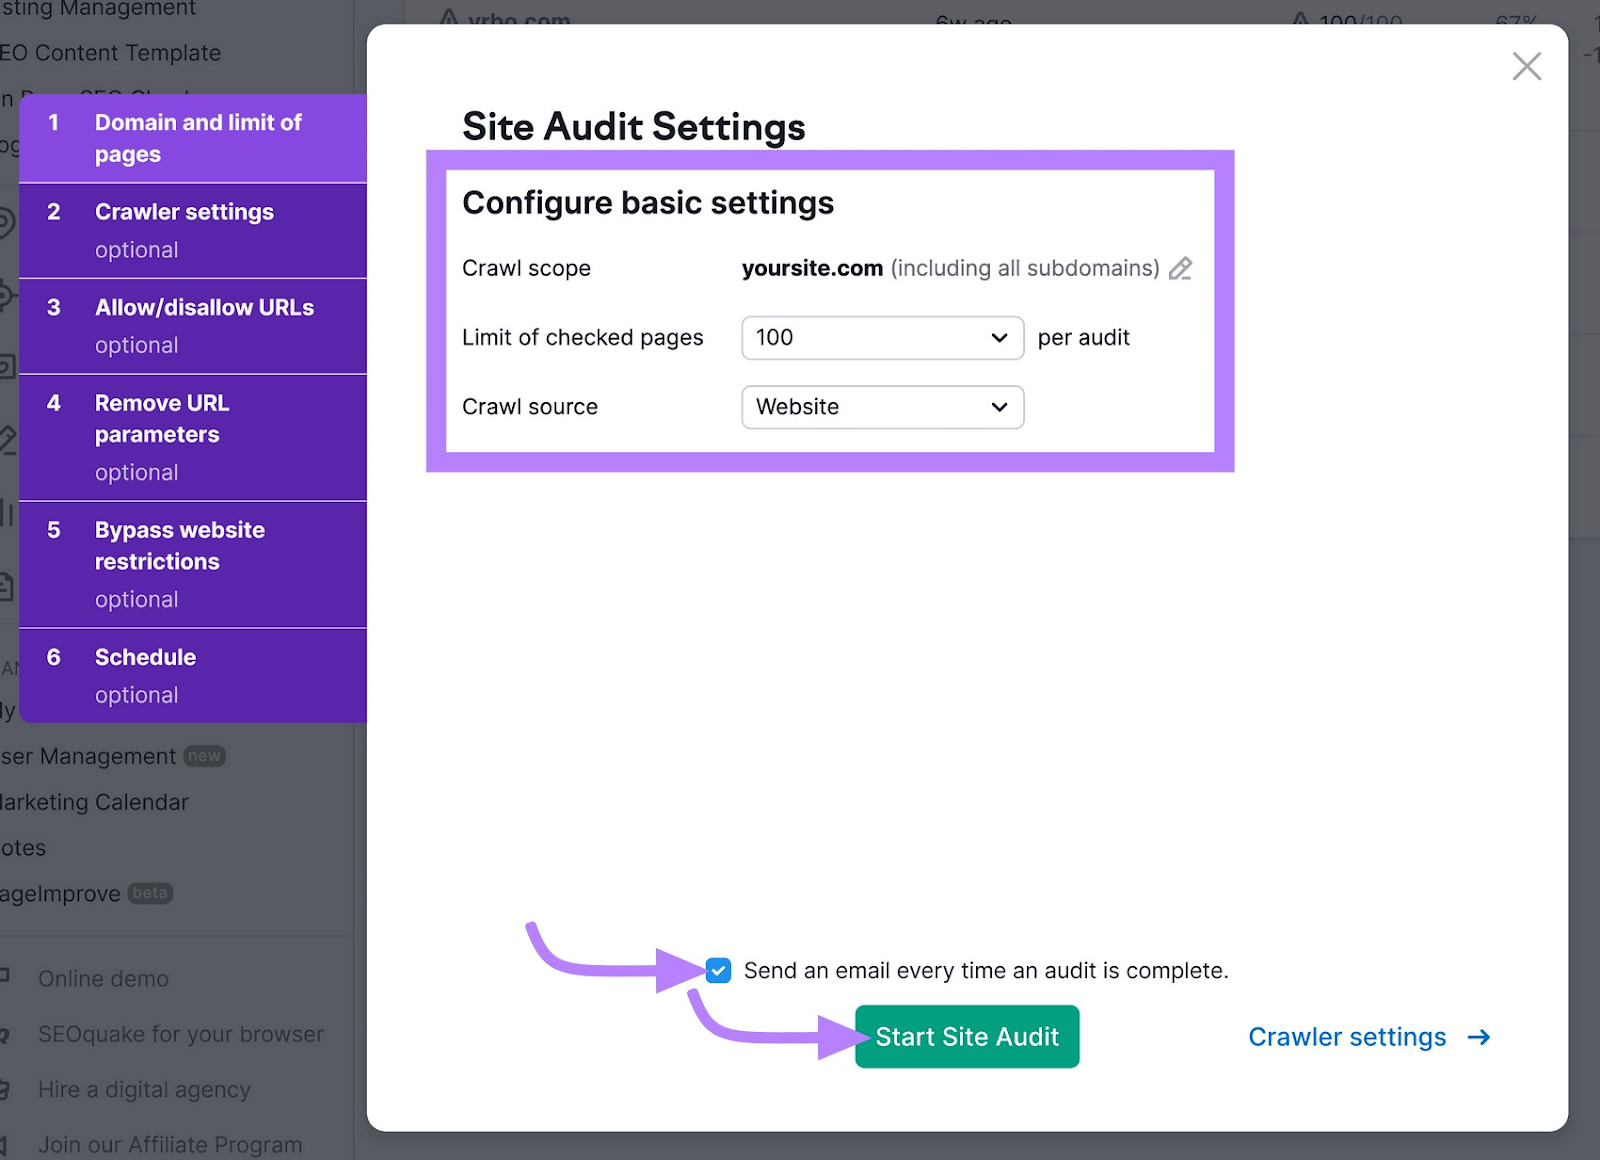 "Configure basic settings" section under Site Audit Settings